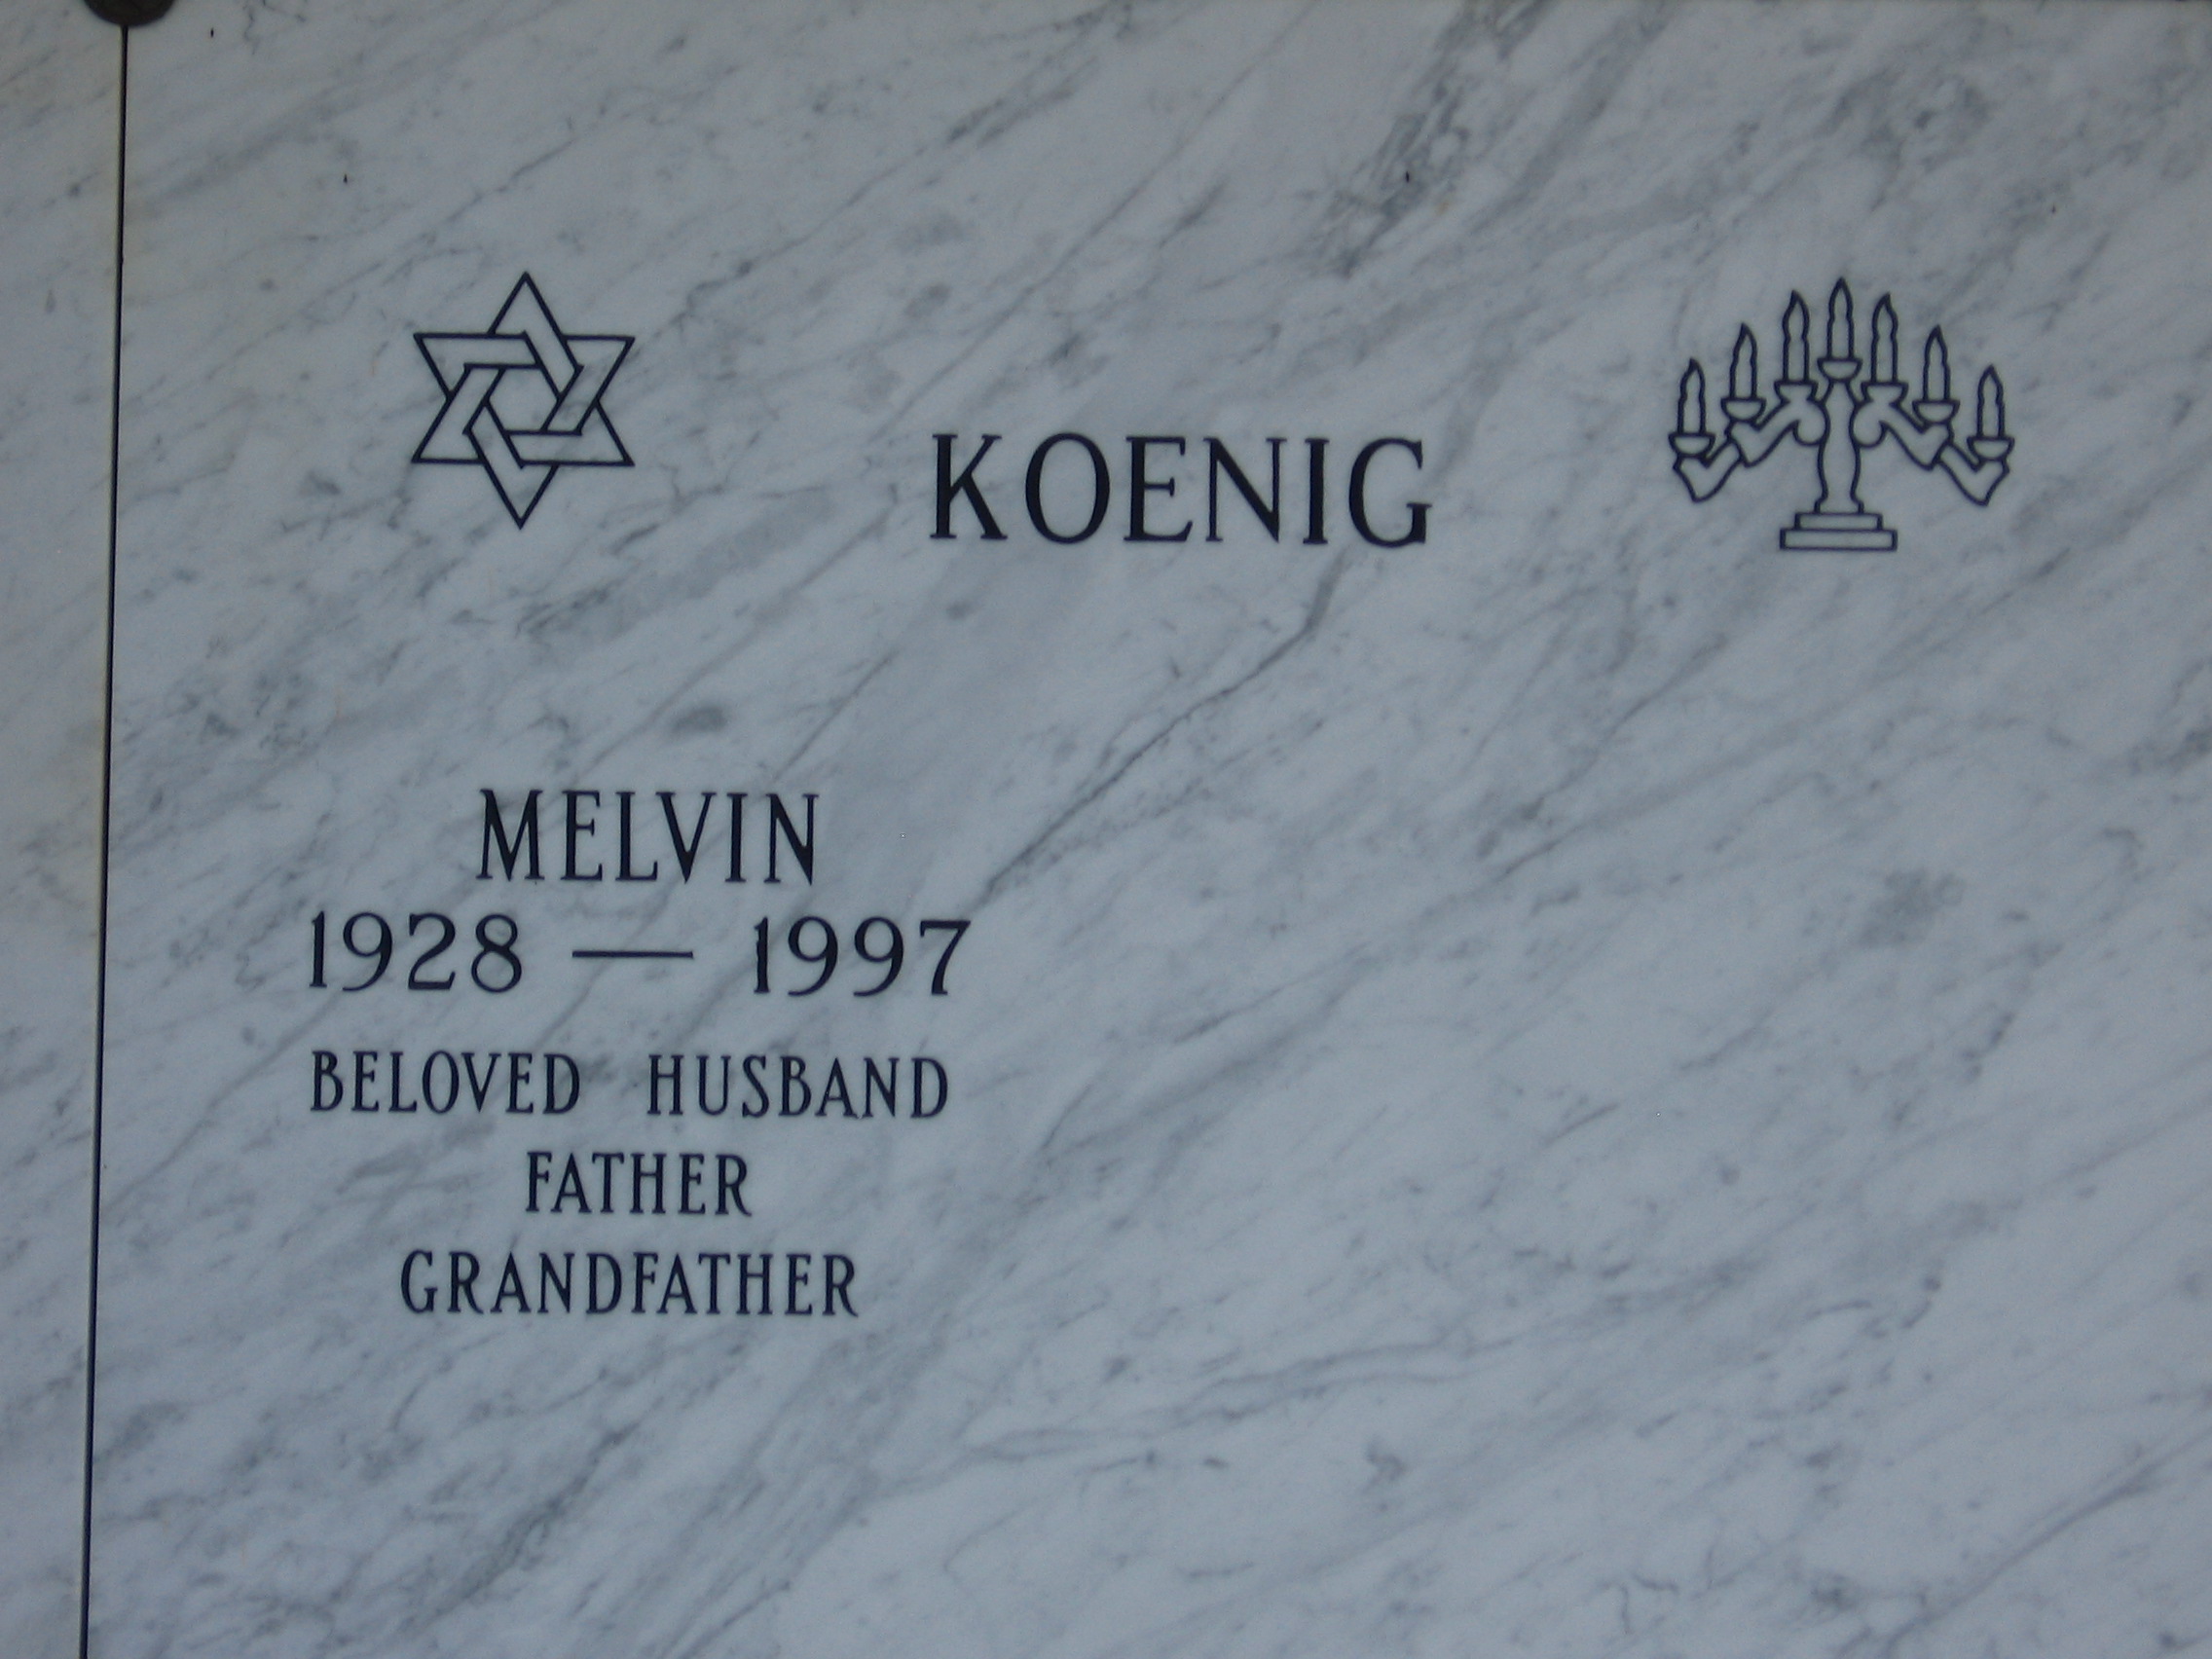 Melvin Koenig